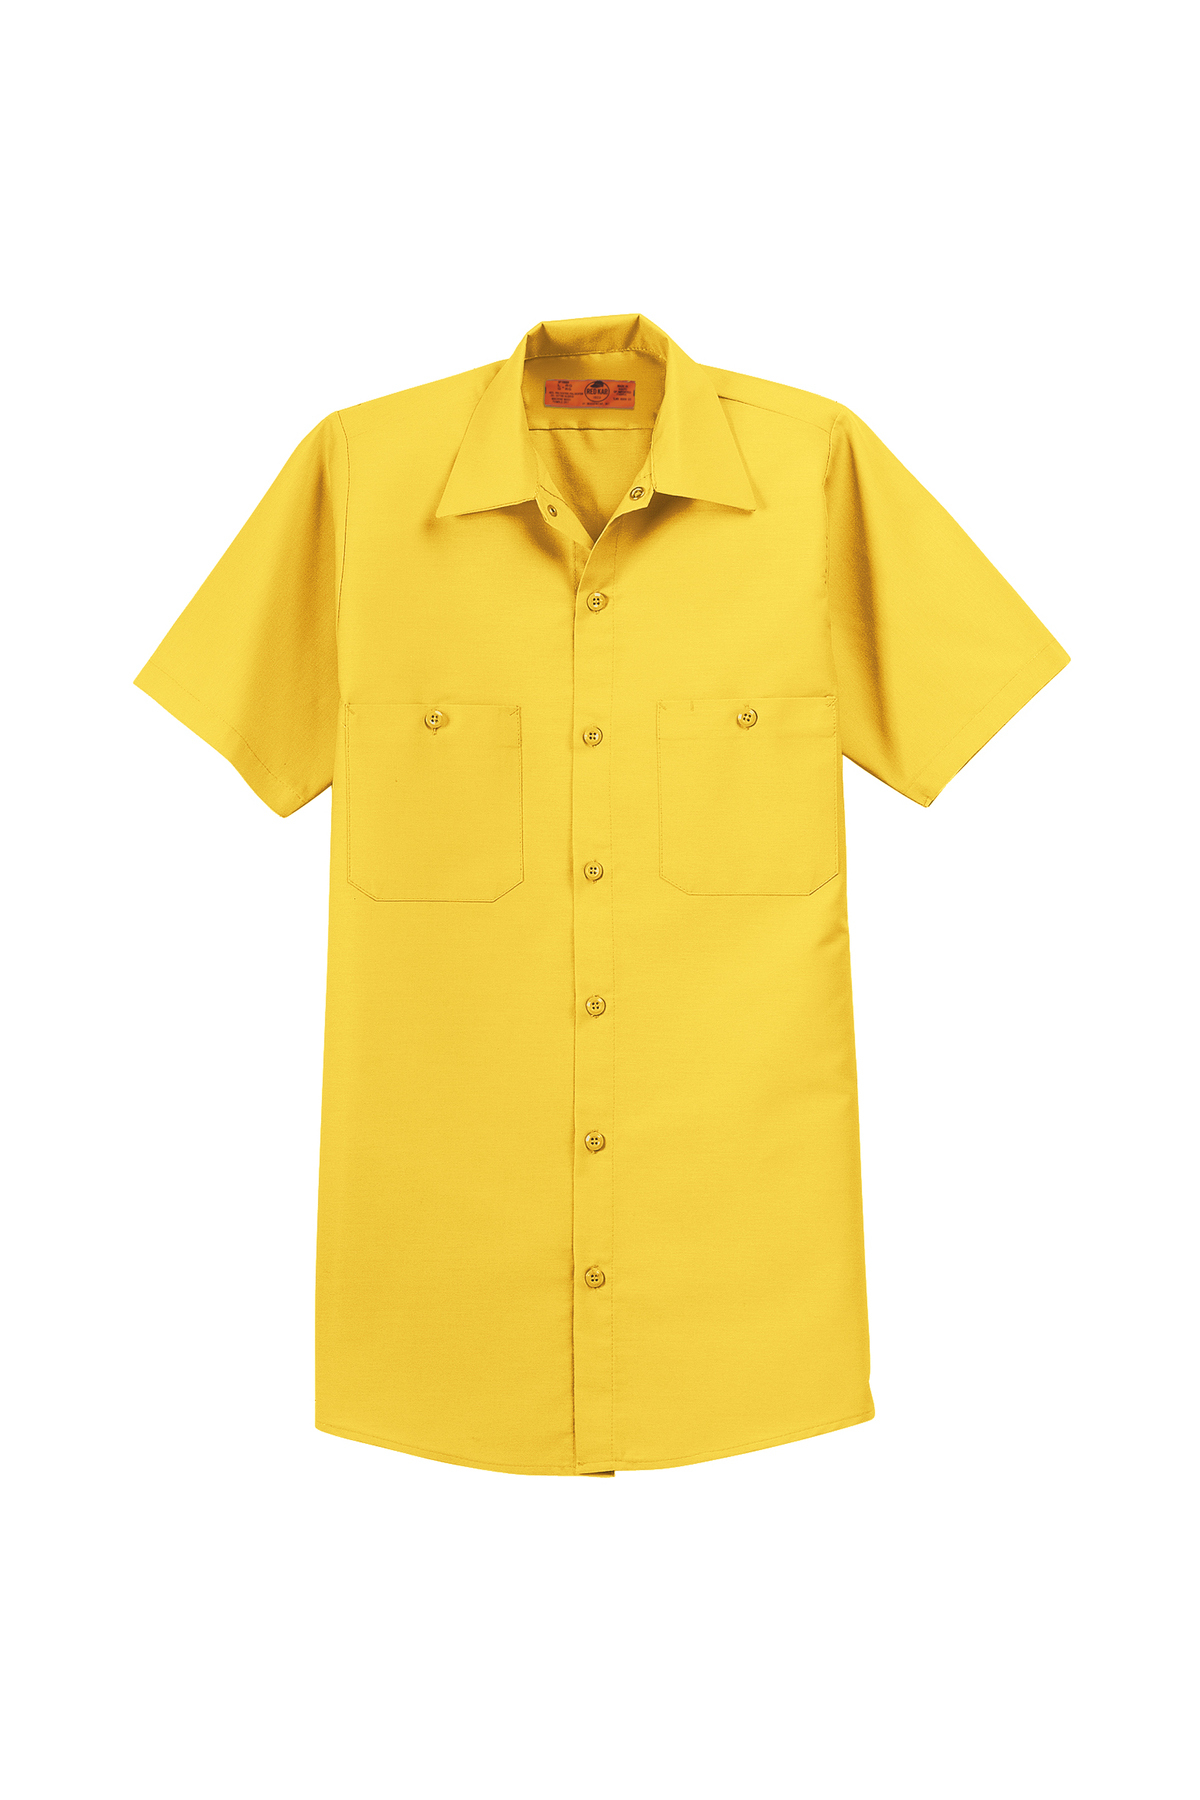 Red Kap Short Sleeve Industrial Work Shirt | Product | SanMar